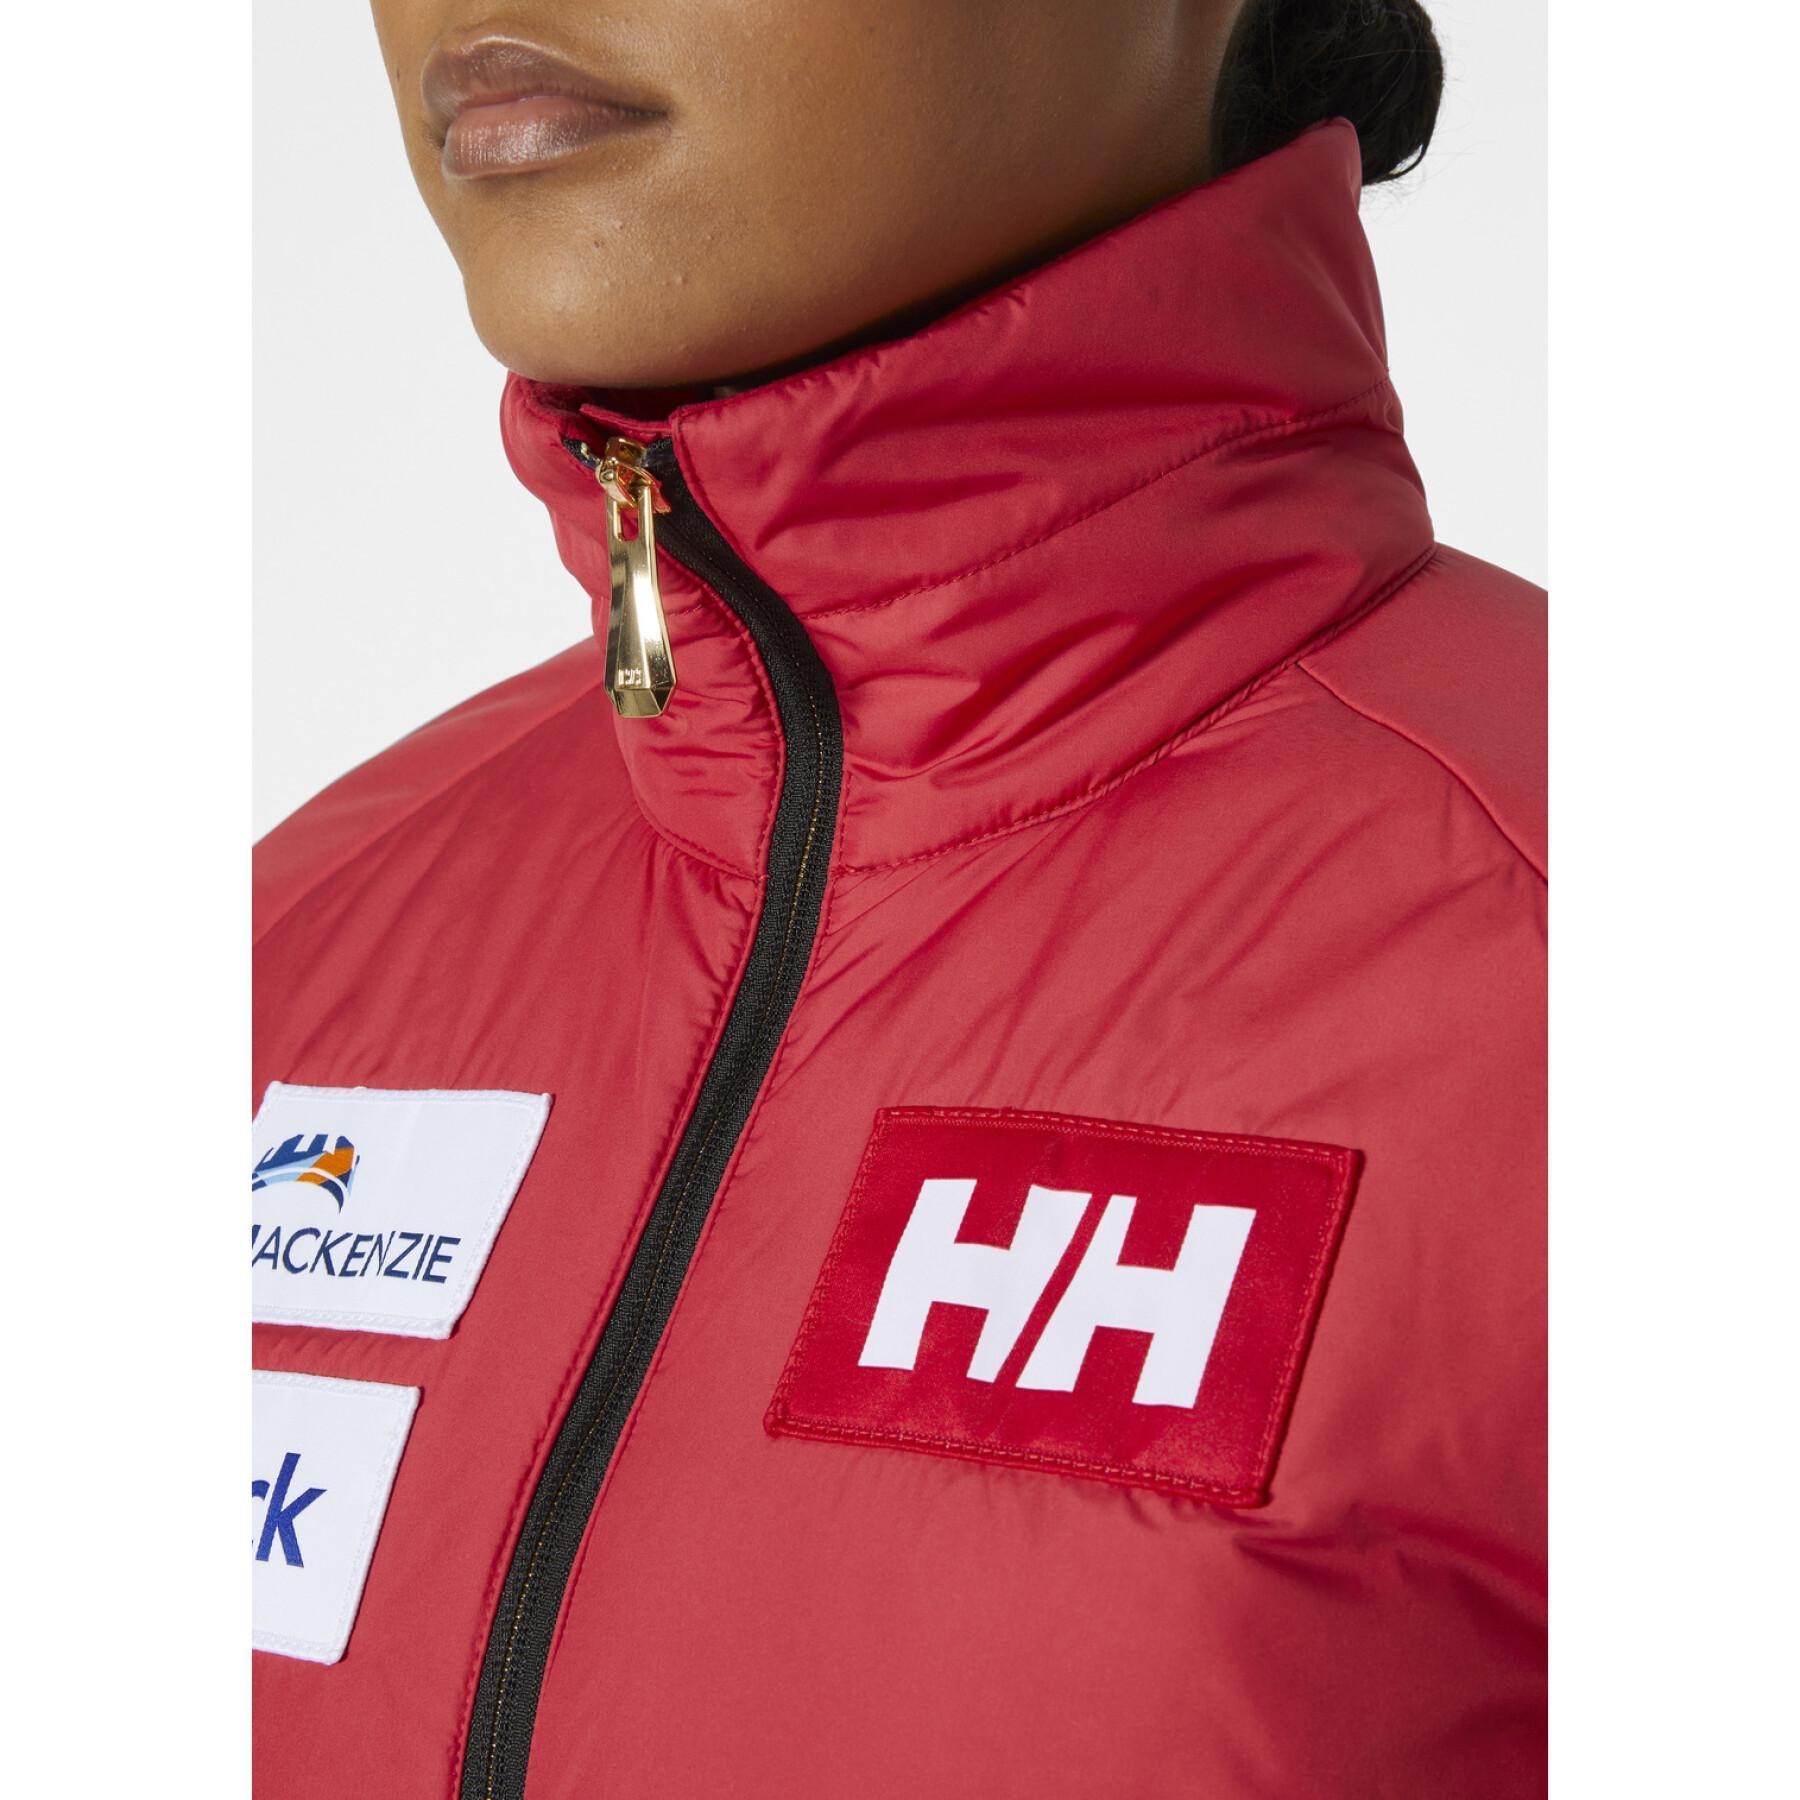 Veste de ski isolante femme Helly Hansen World Cup